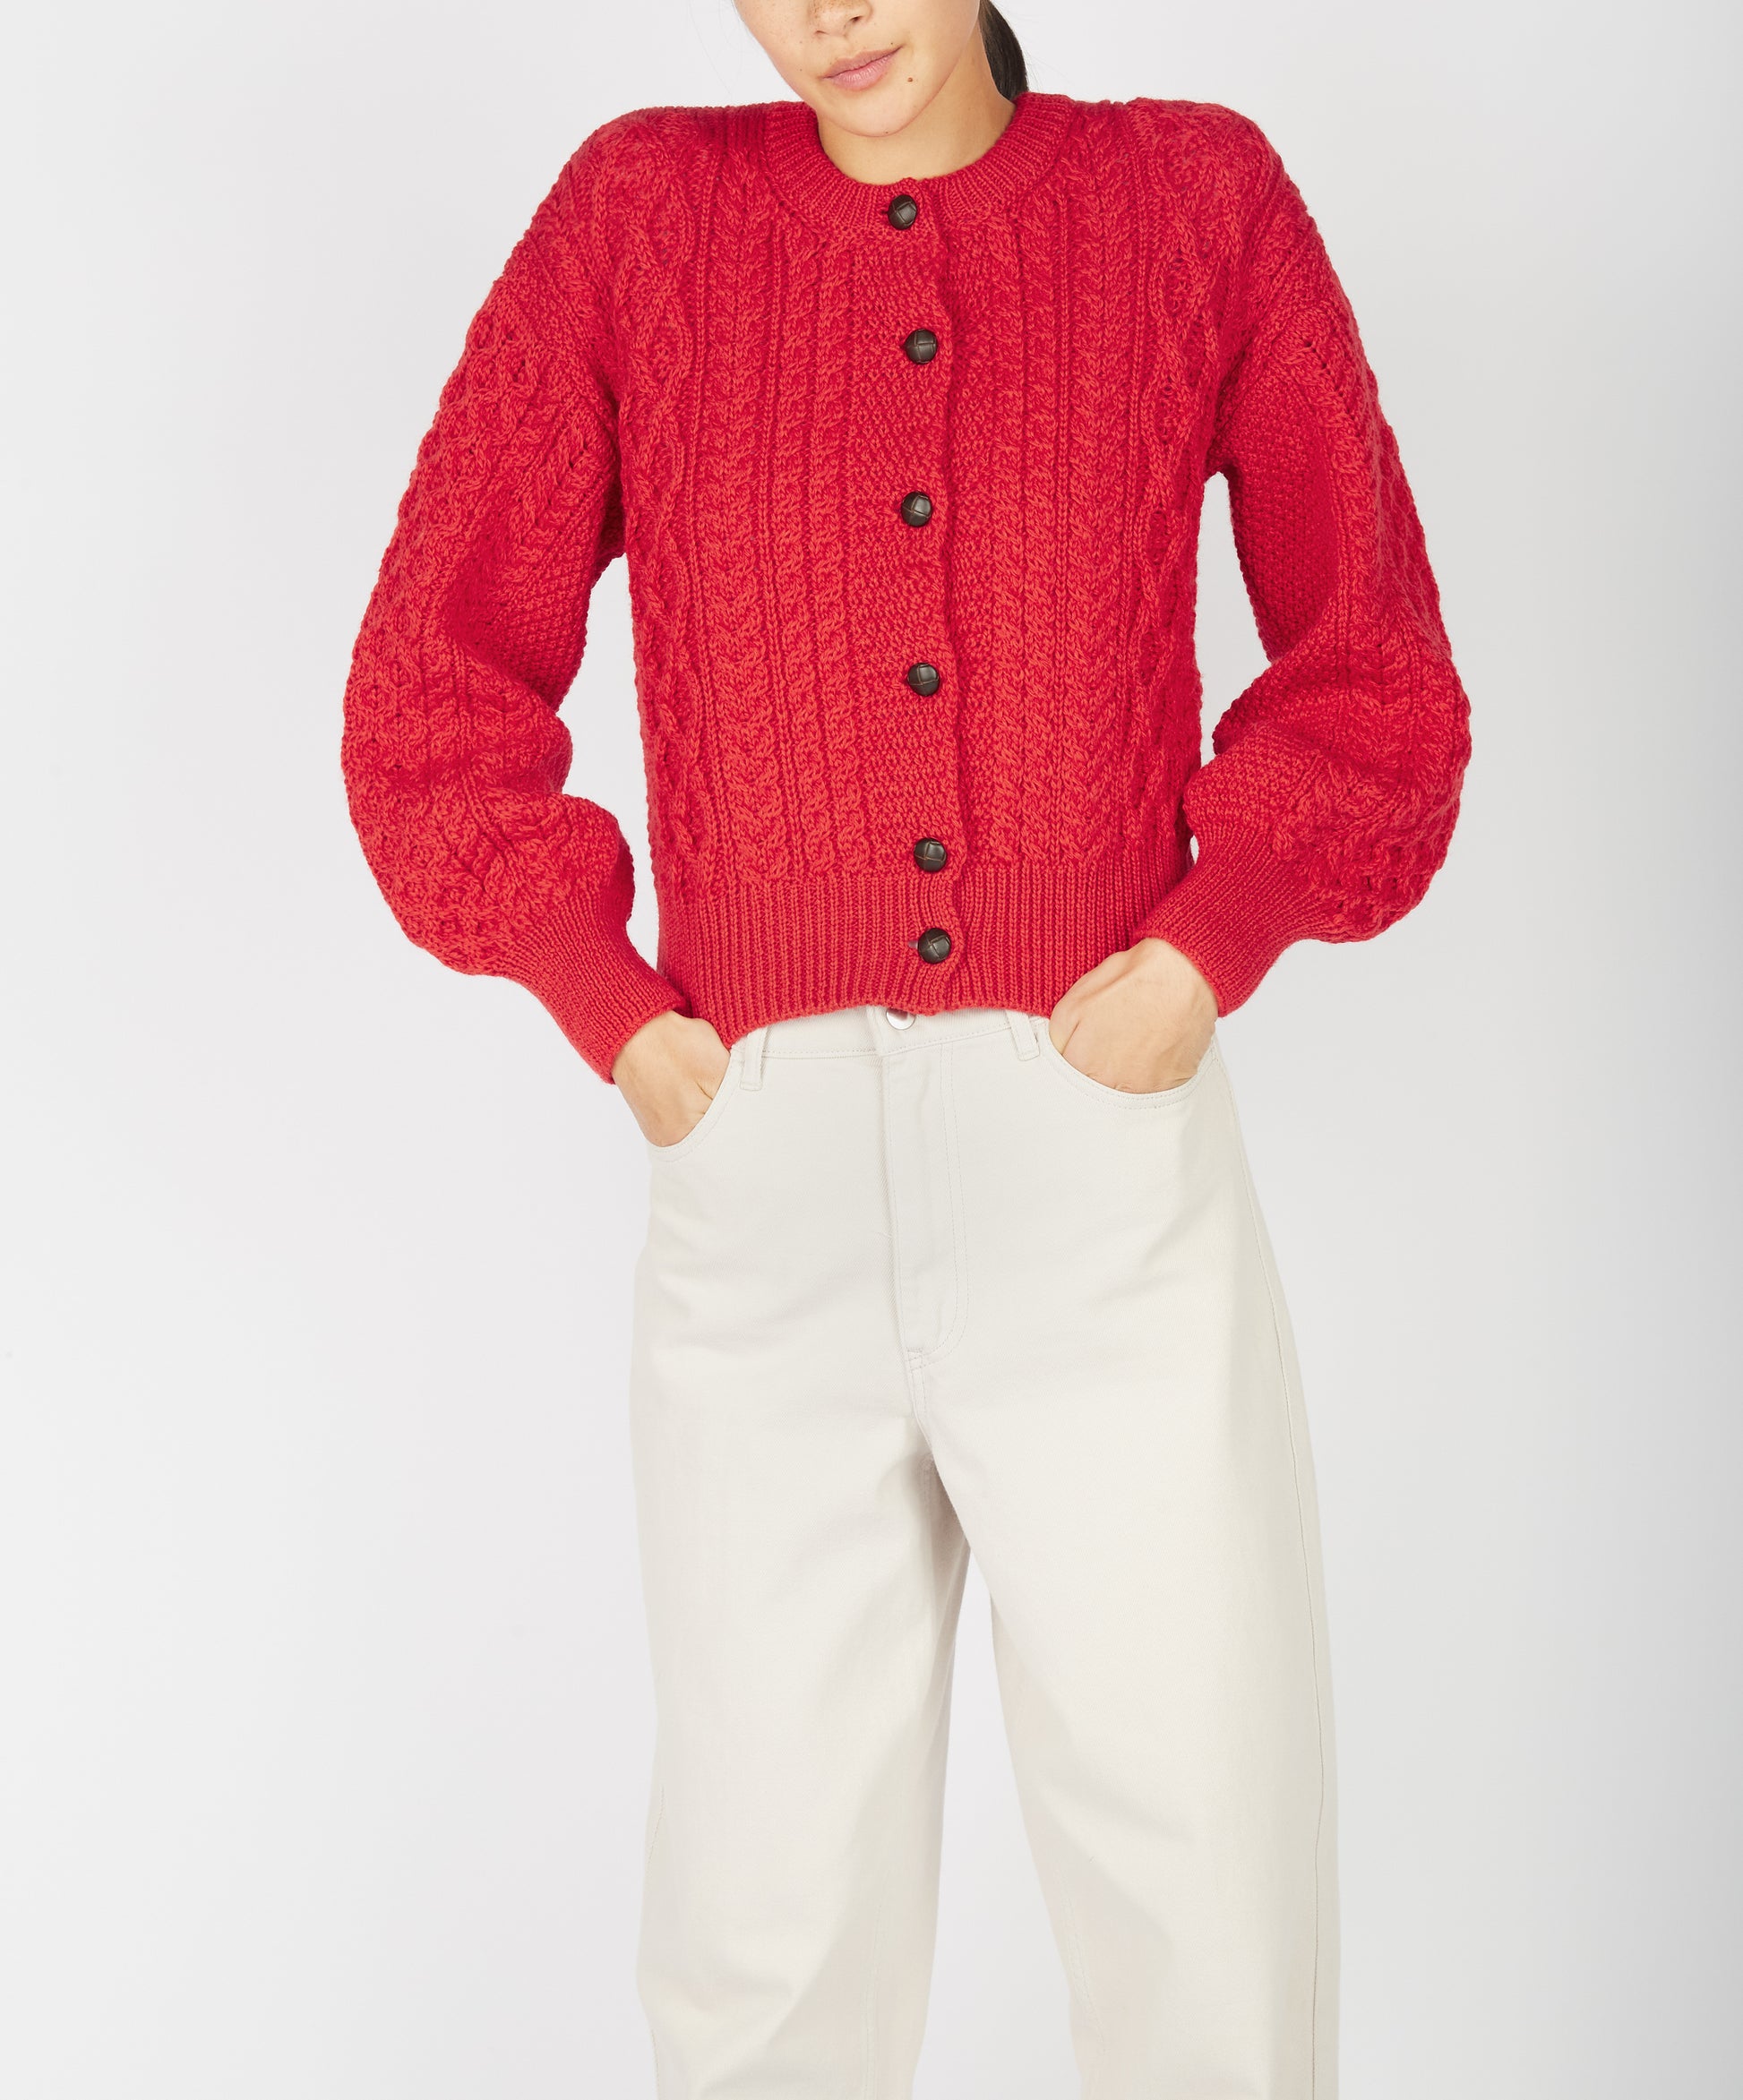 IrelandsEye Knitwear Clover Cropped Aran Cardigan Scarlet